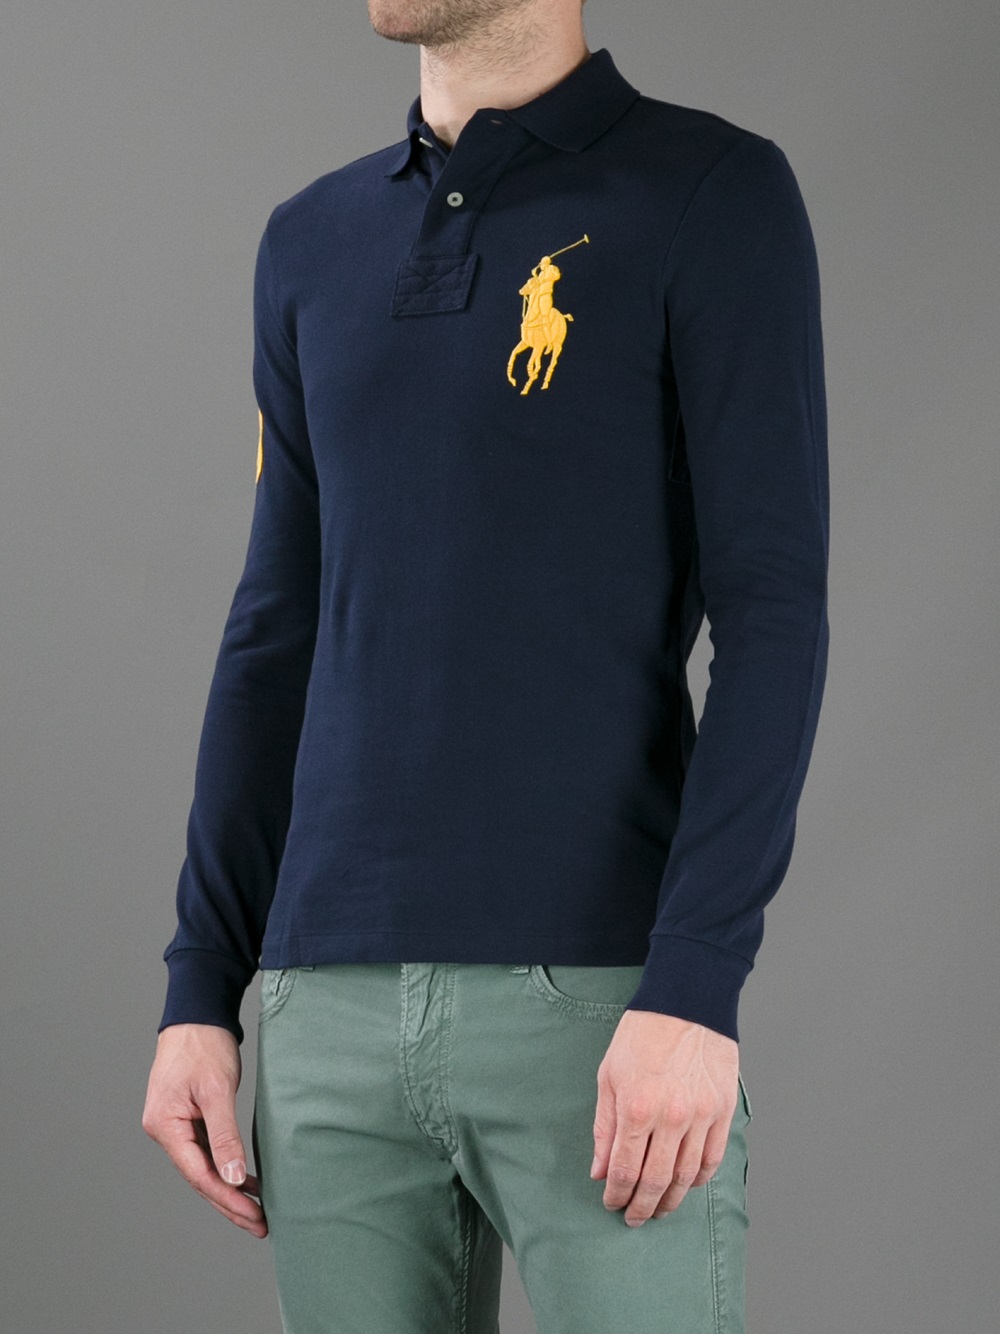 Ralph Lauren Long Sleeve Polo Shirt in Navy (Blue) for Men - Lyst